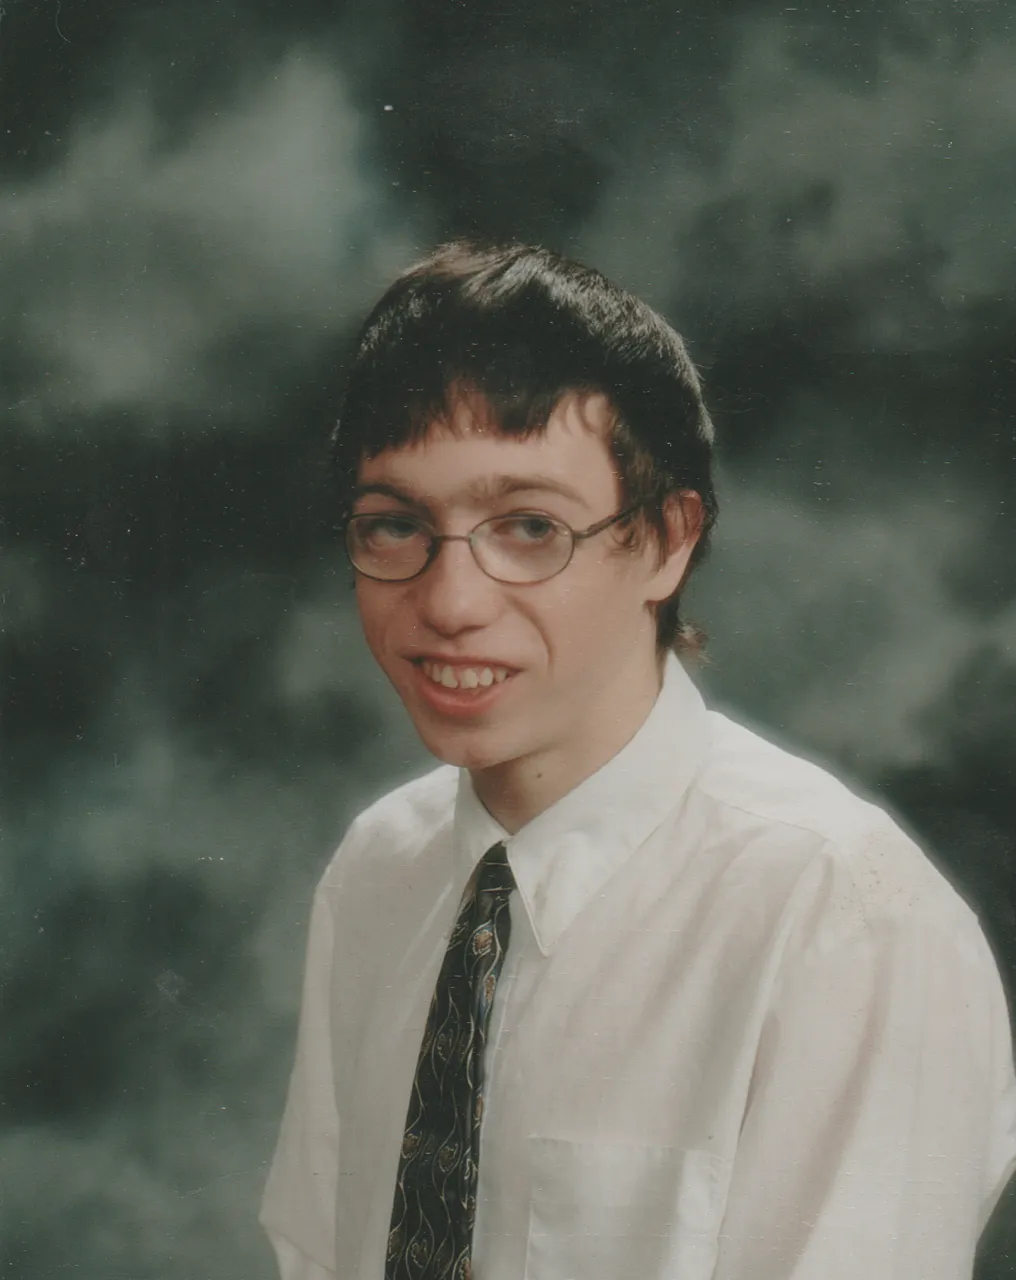 2004 Senior Picture Tie.png